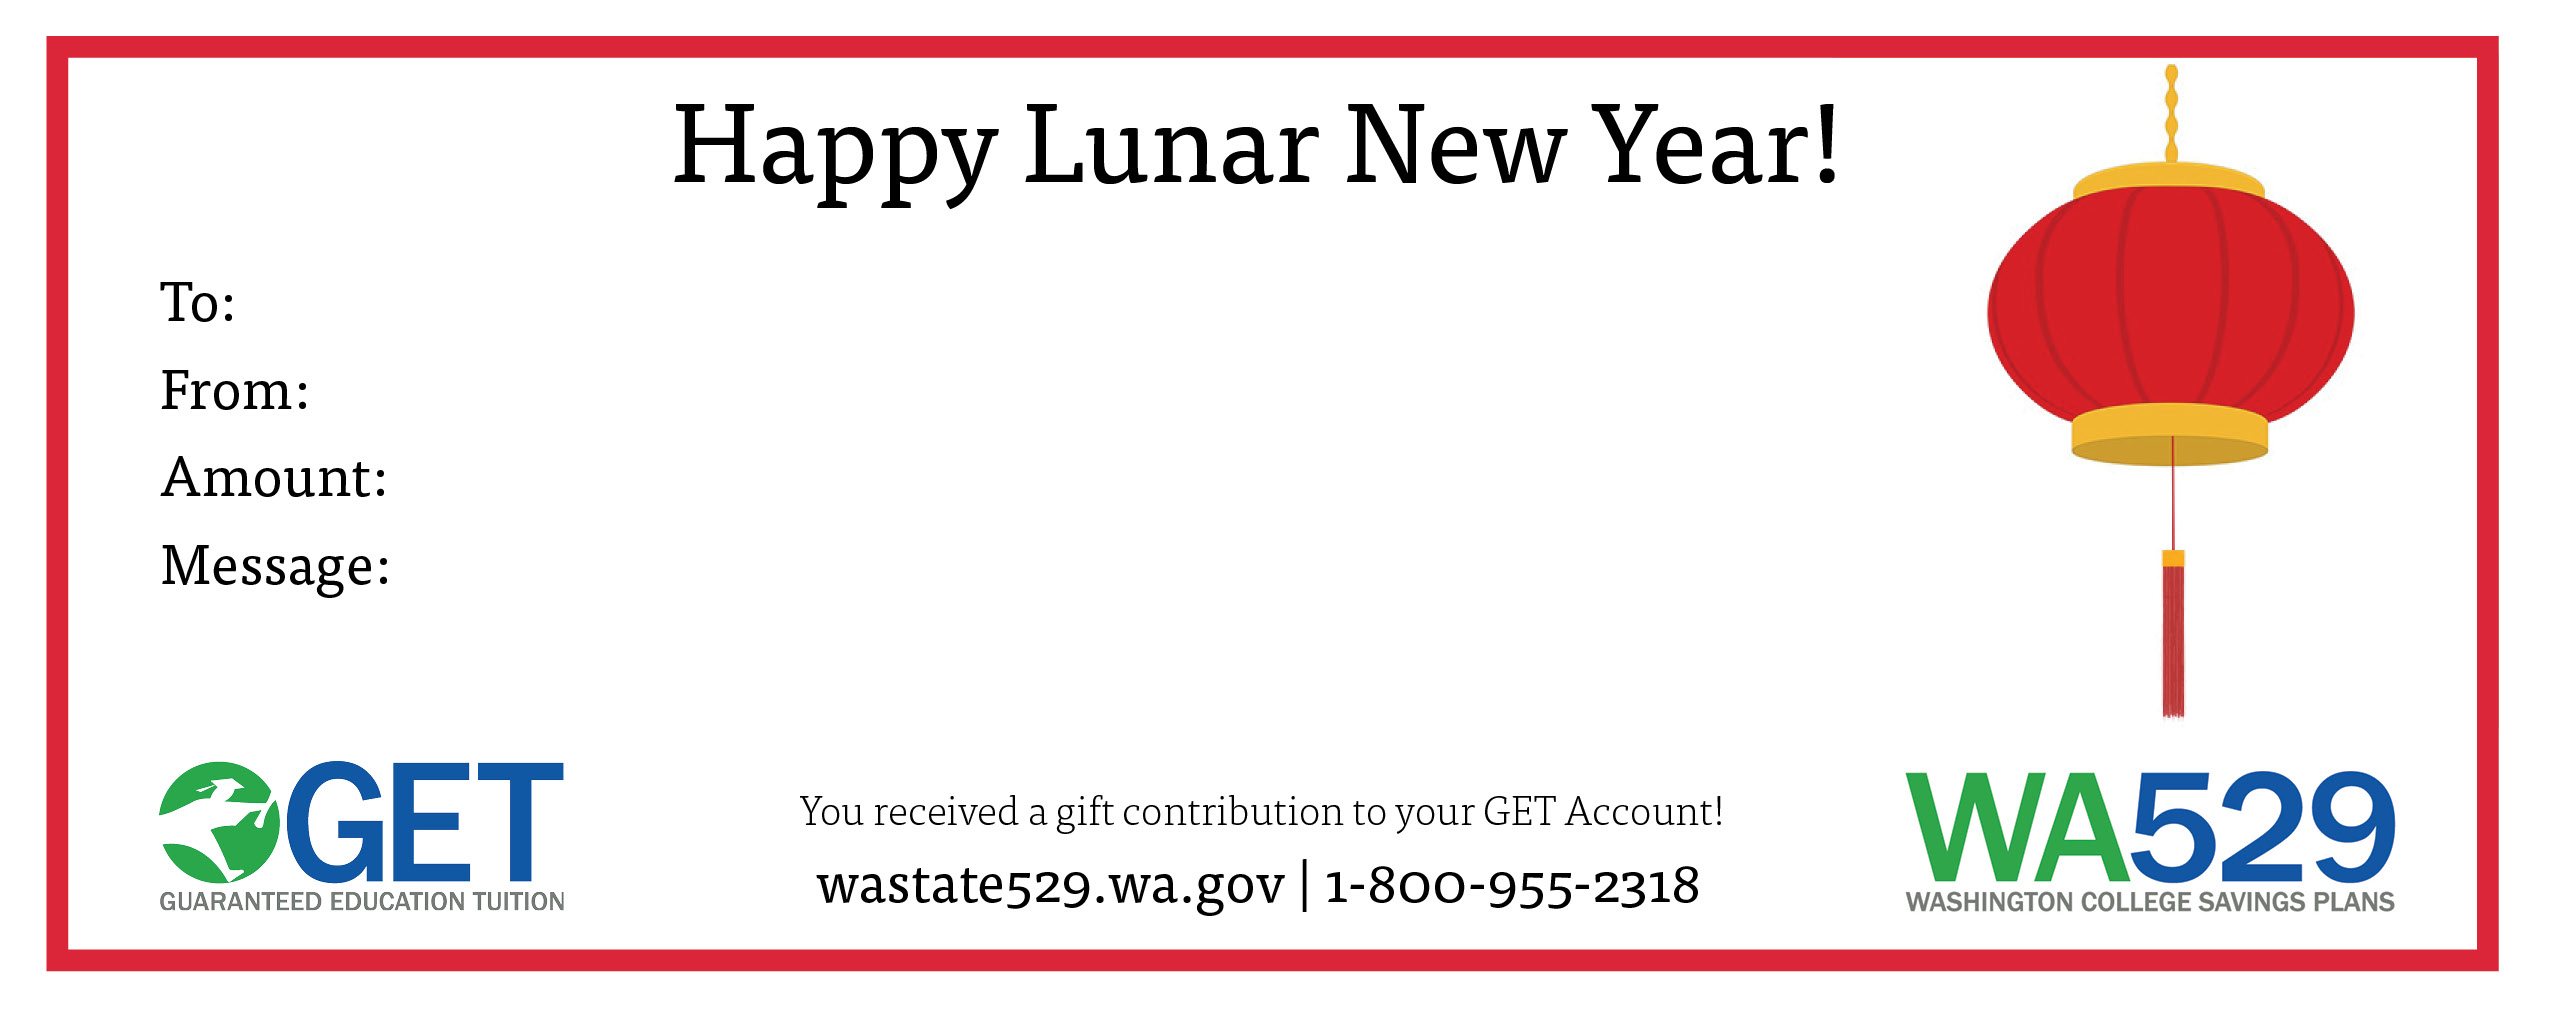 GET Lunar New Year Certificate image